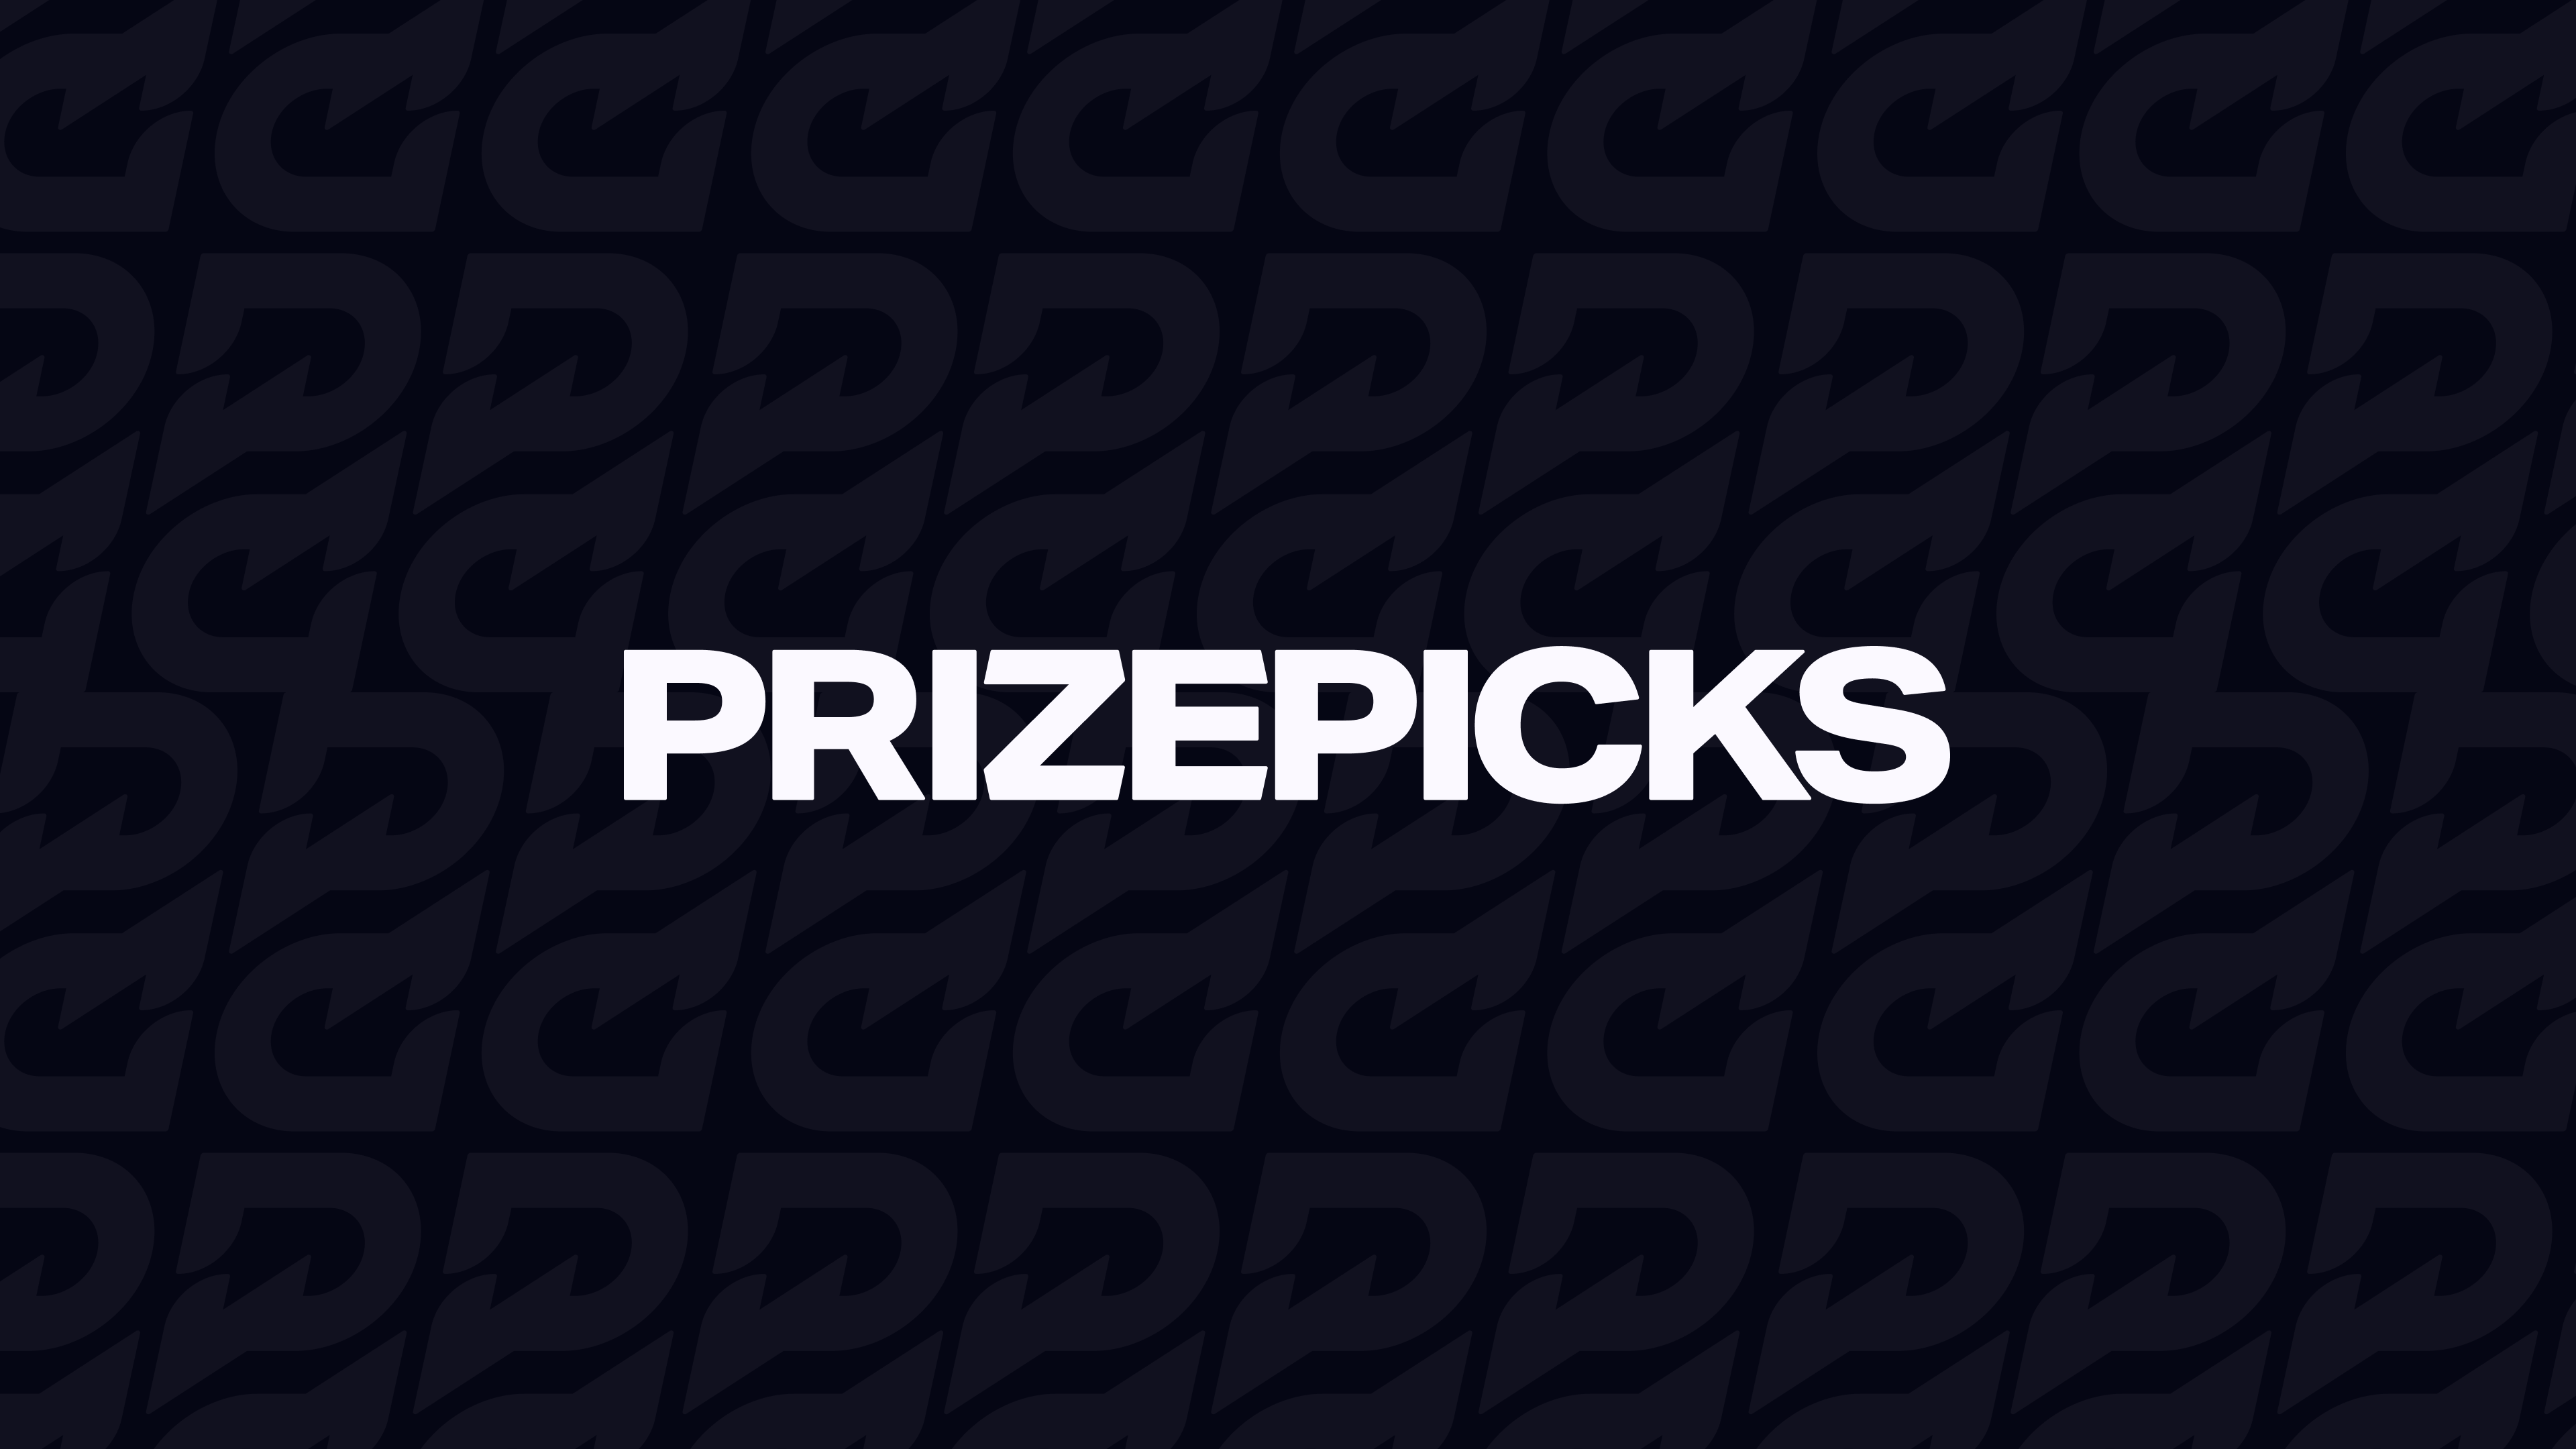 prizepicks logo text